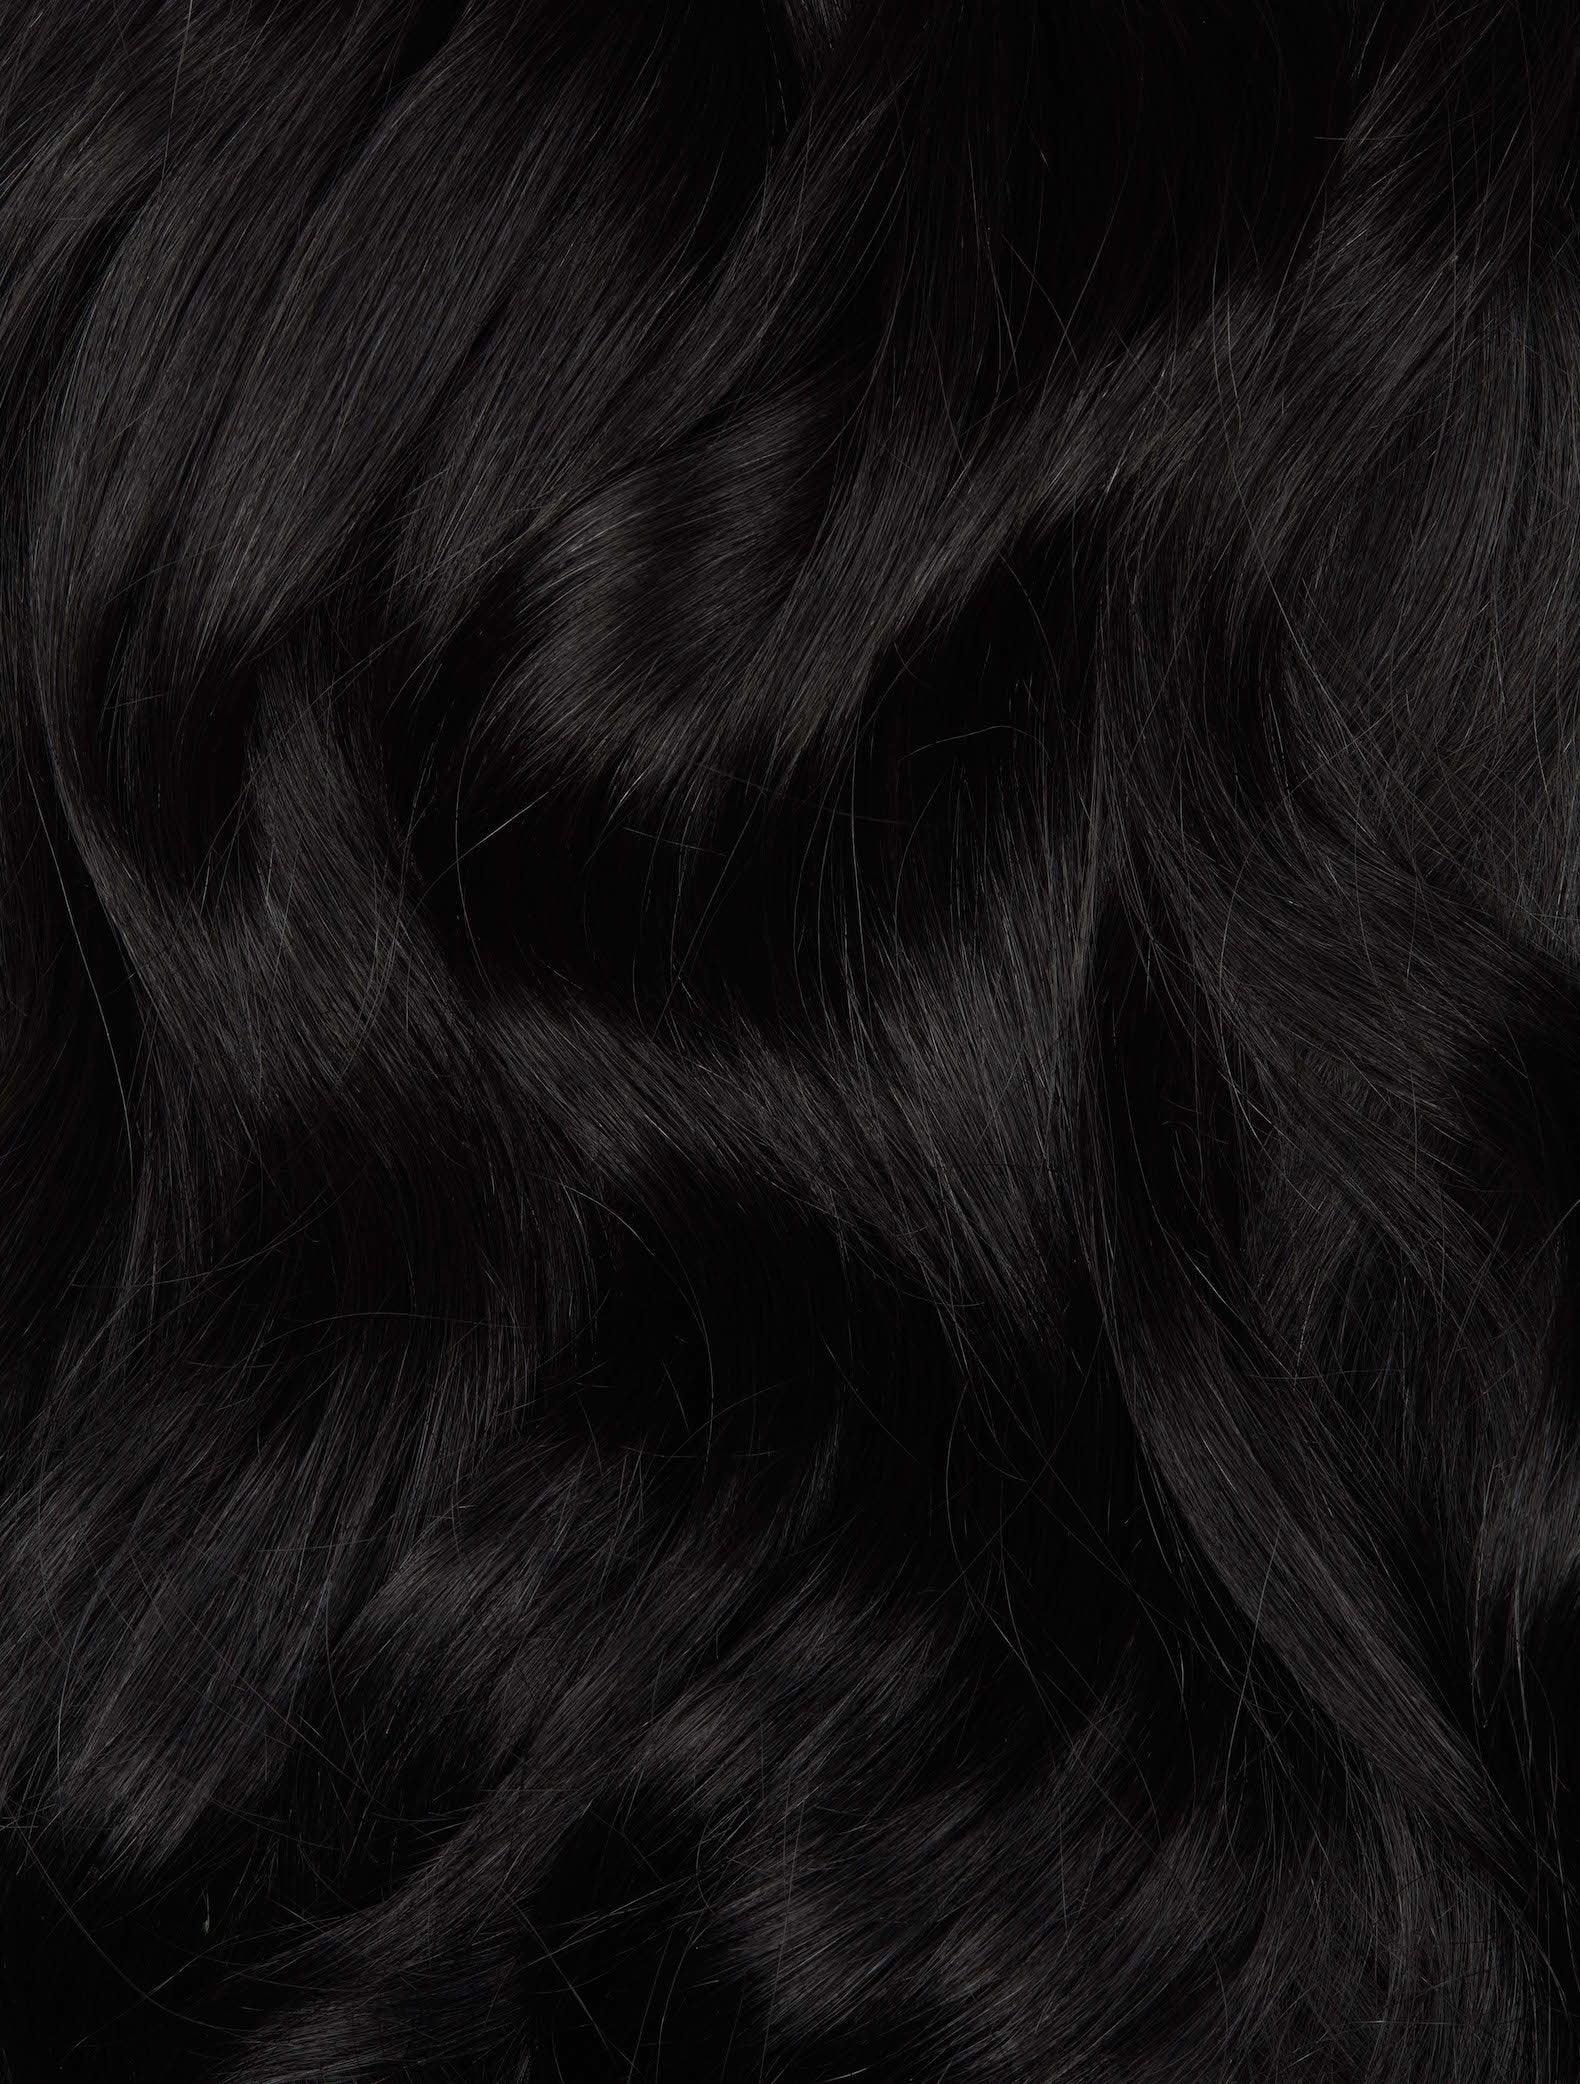 Jet Black (1) 22 220g - Black Hair Extensions – BOMBAY HAIR